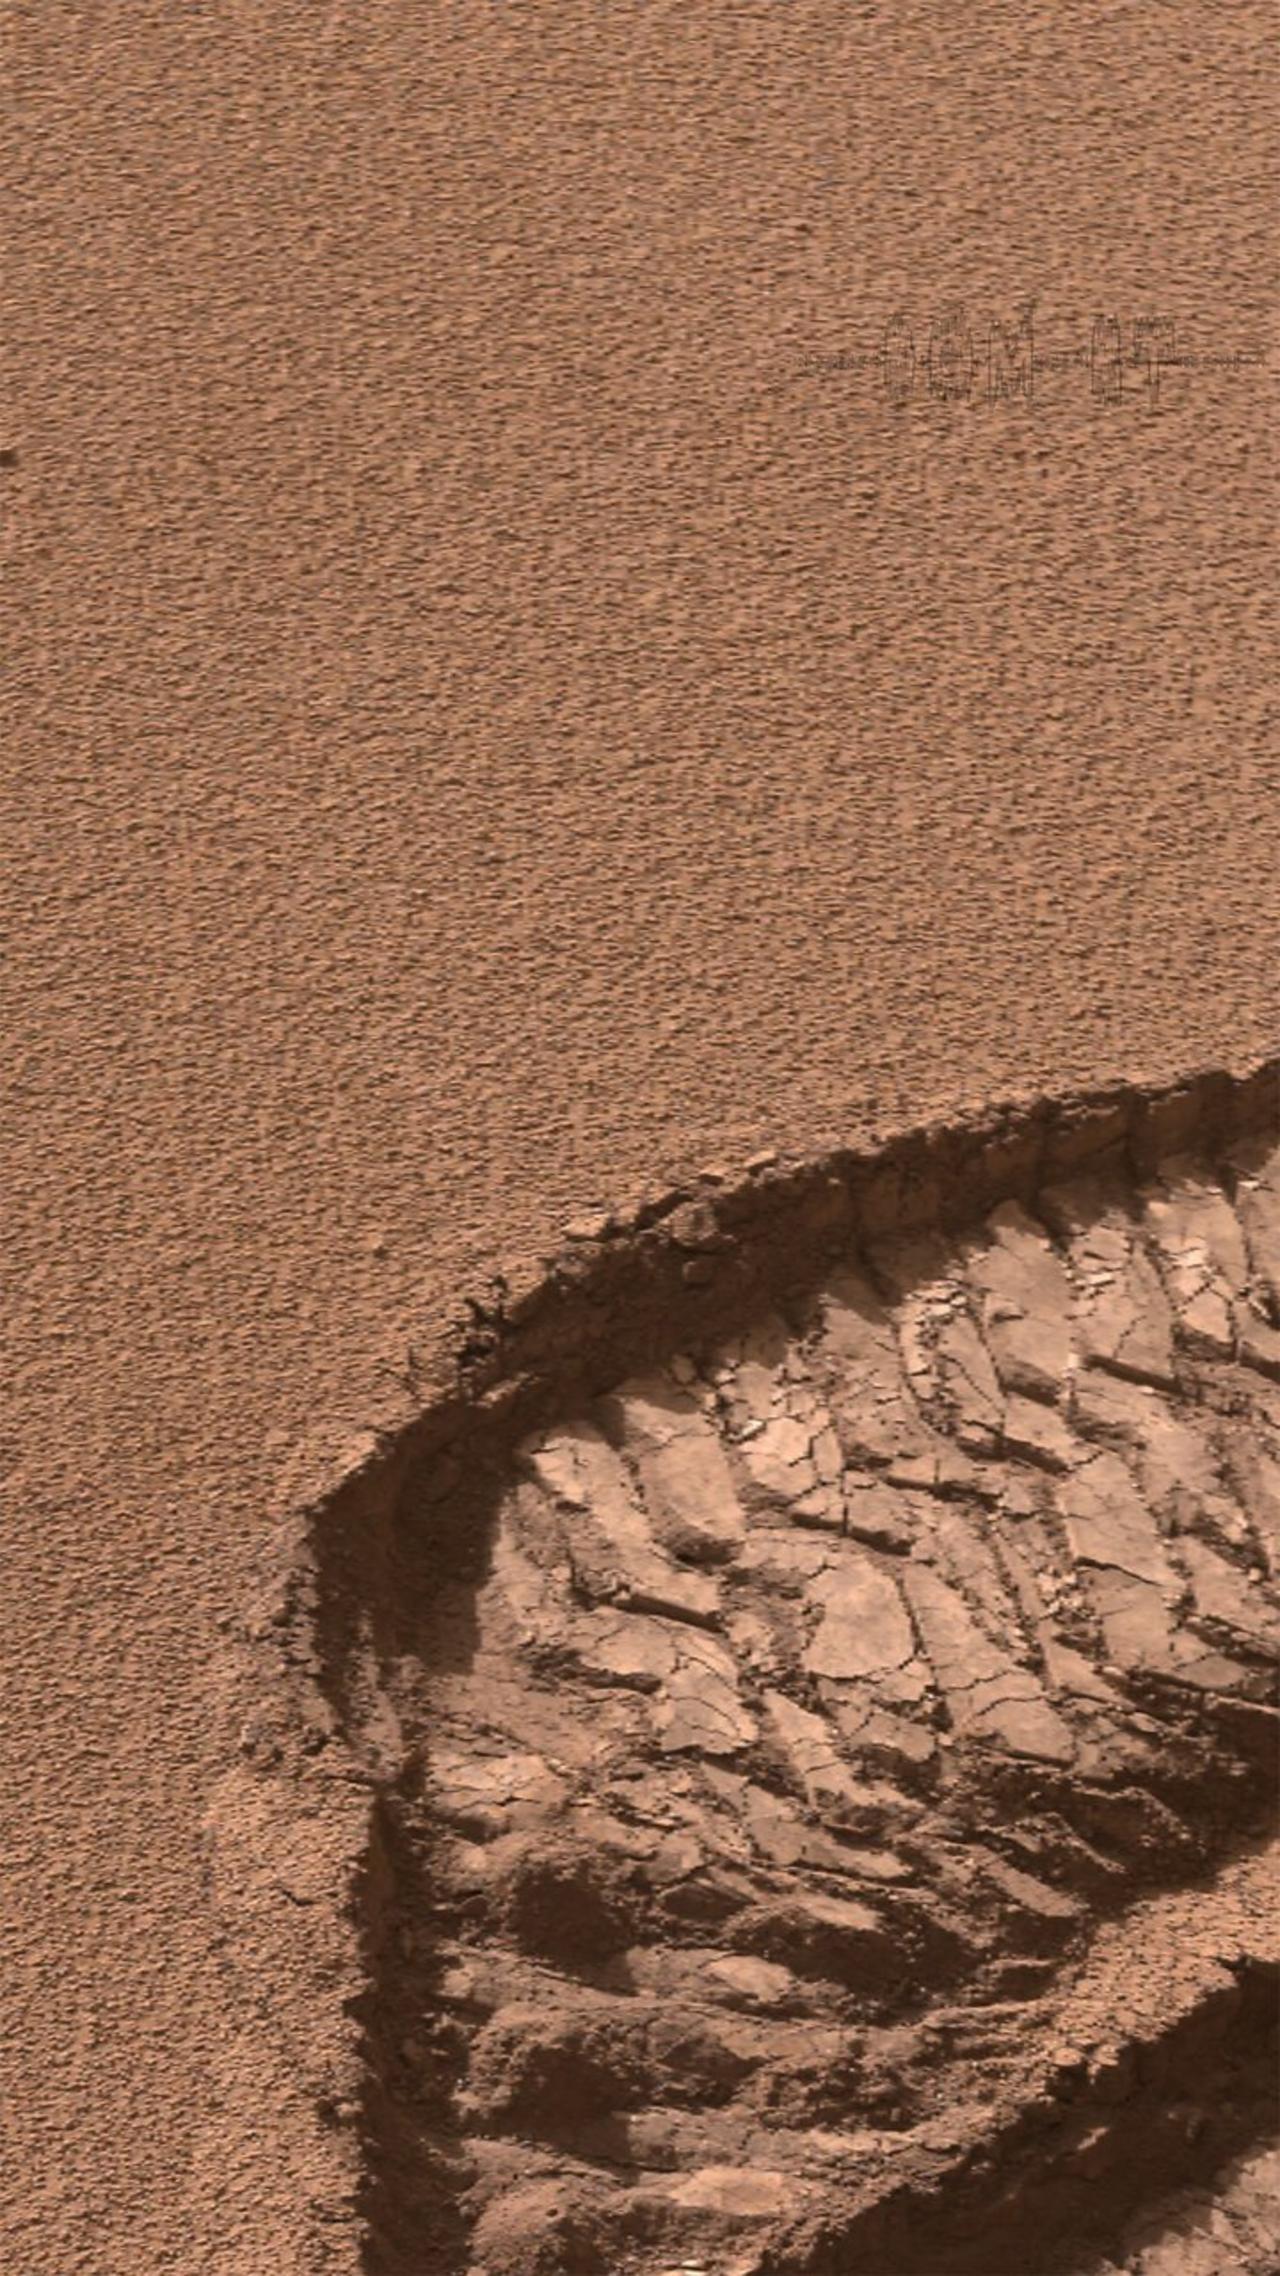 Som ET - 82 - Mars - Curiosity Sol 530 - Video 3